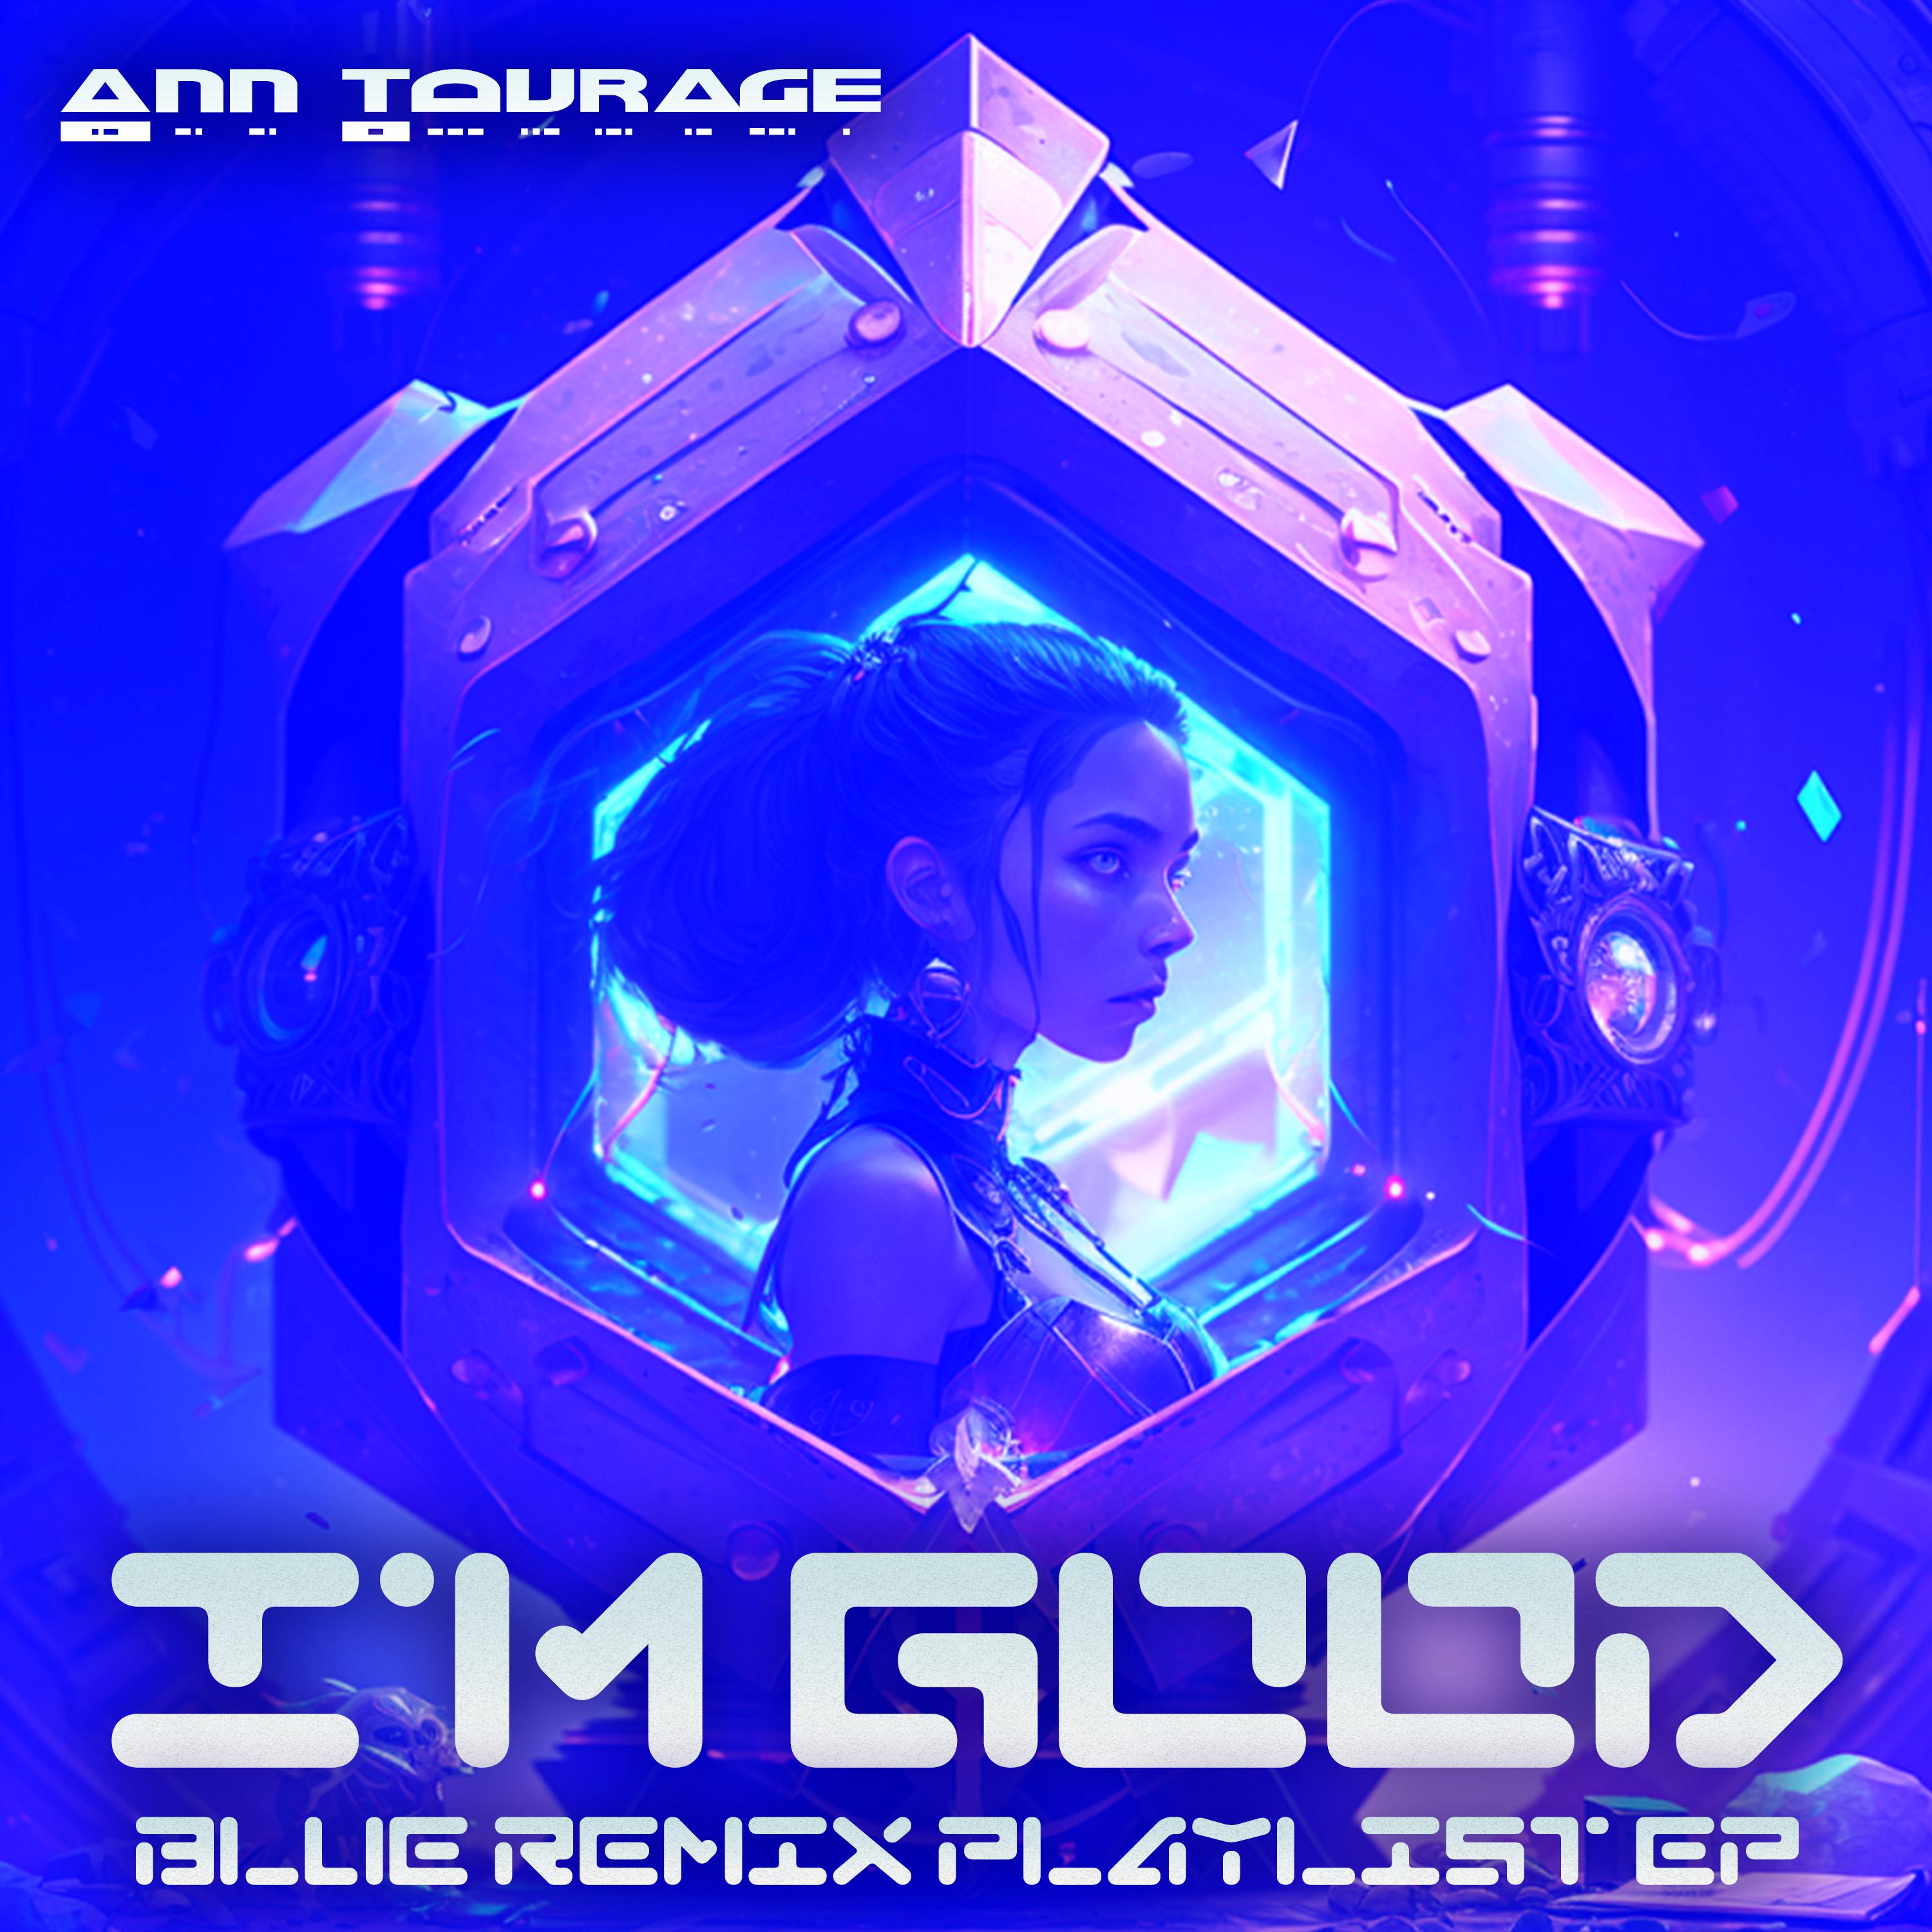 Ann Tourage - I'm Good (Acapella Vocal Mix 124 BPM)